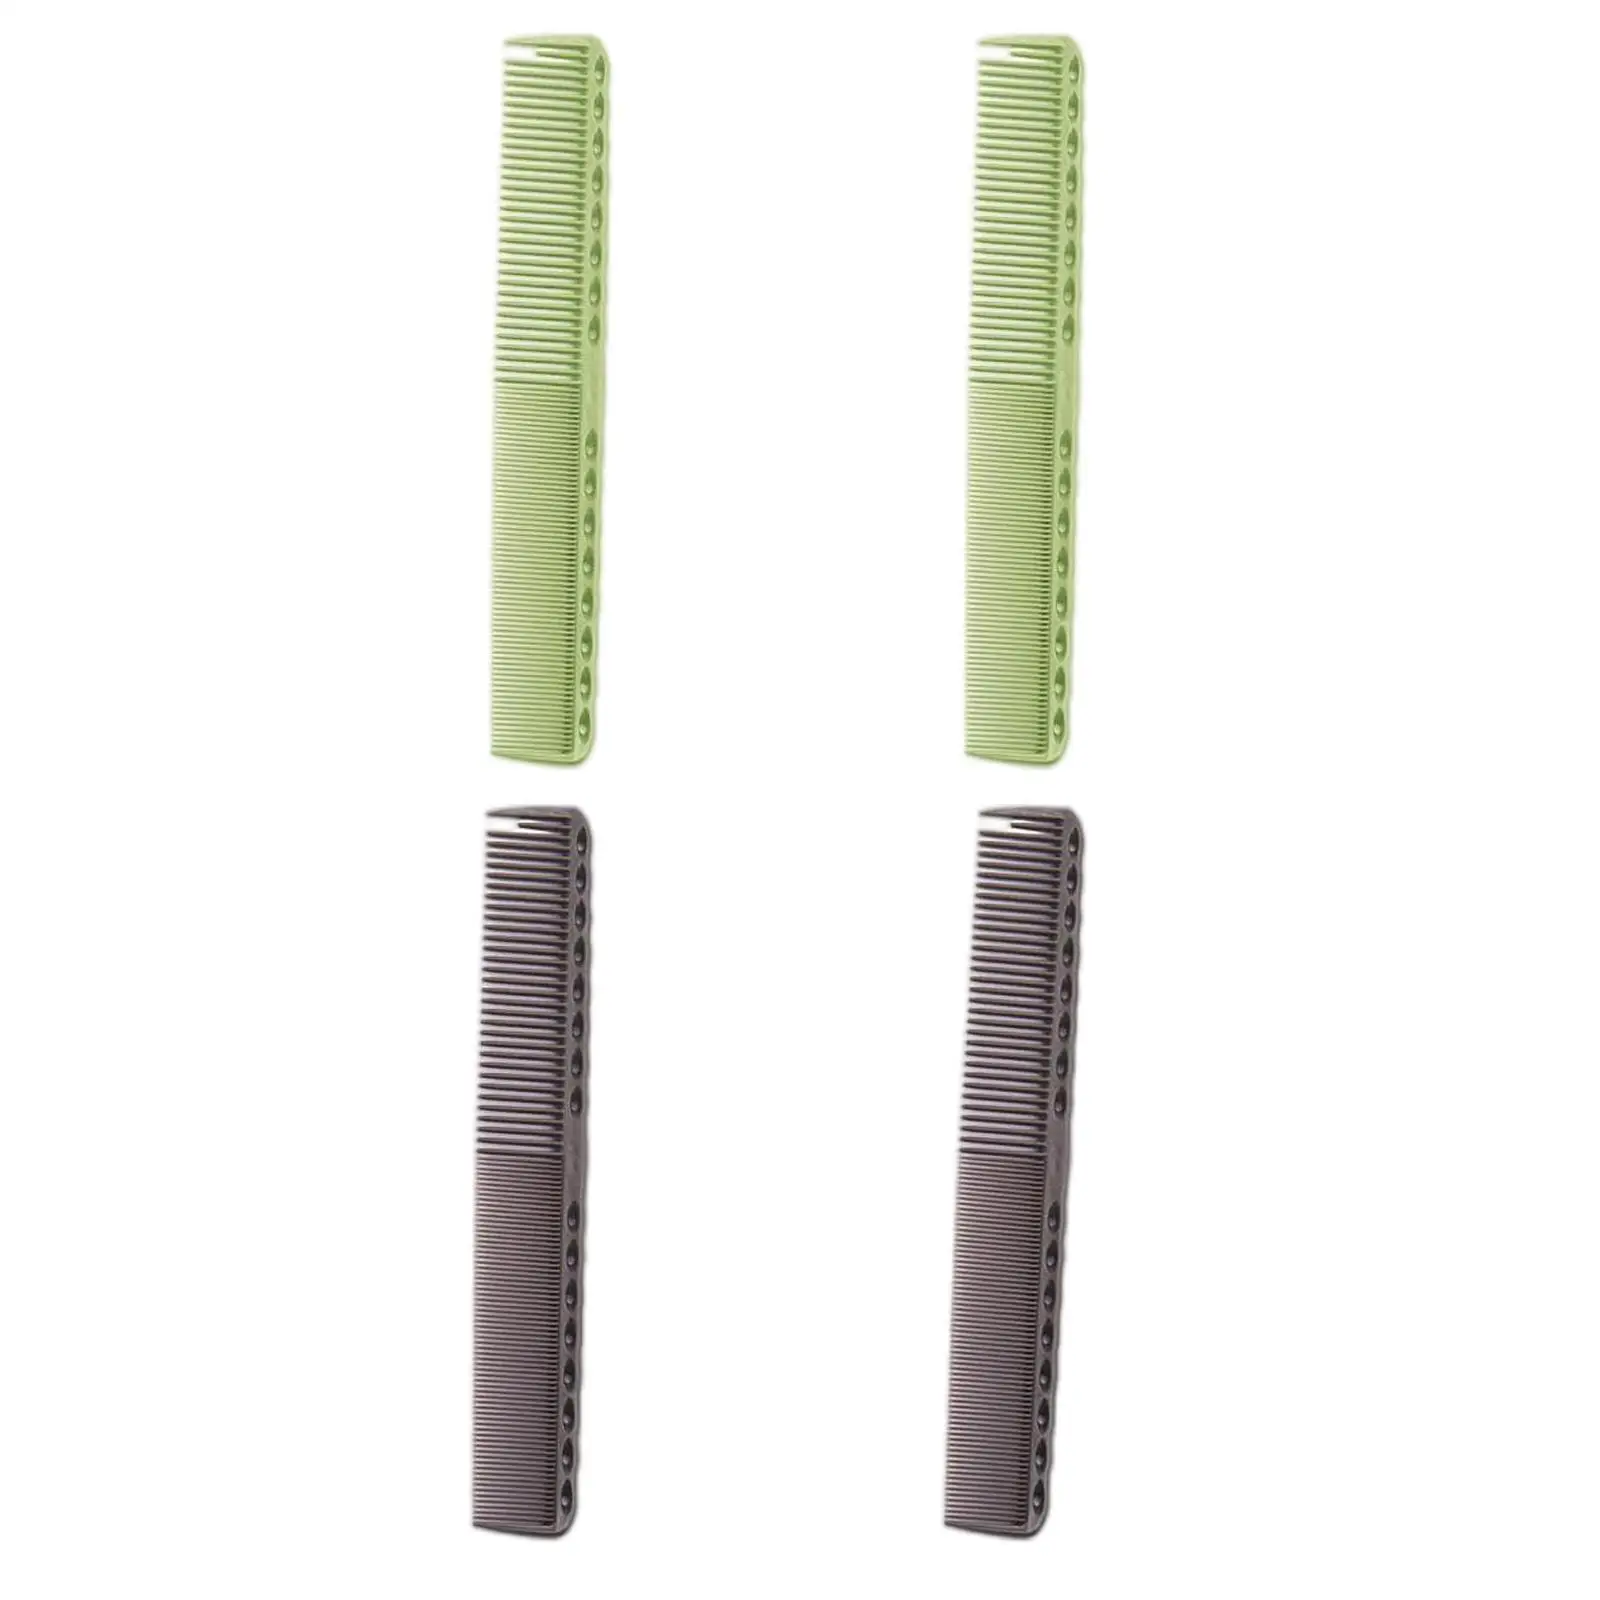 4pcs Professional Barber dressing Comb  Cutting Styling Combs Tool